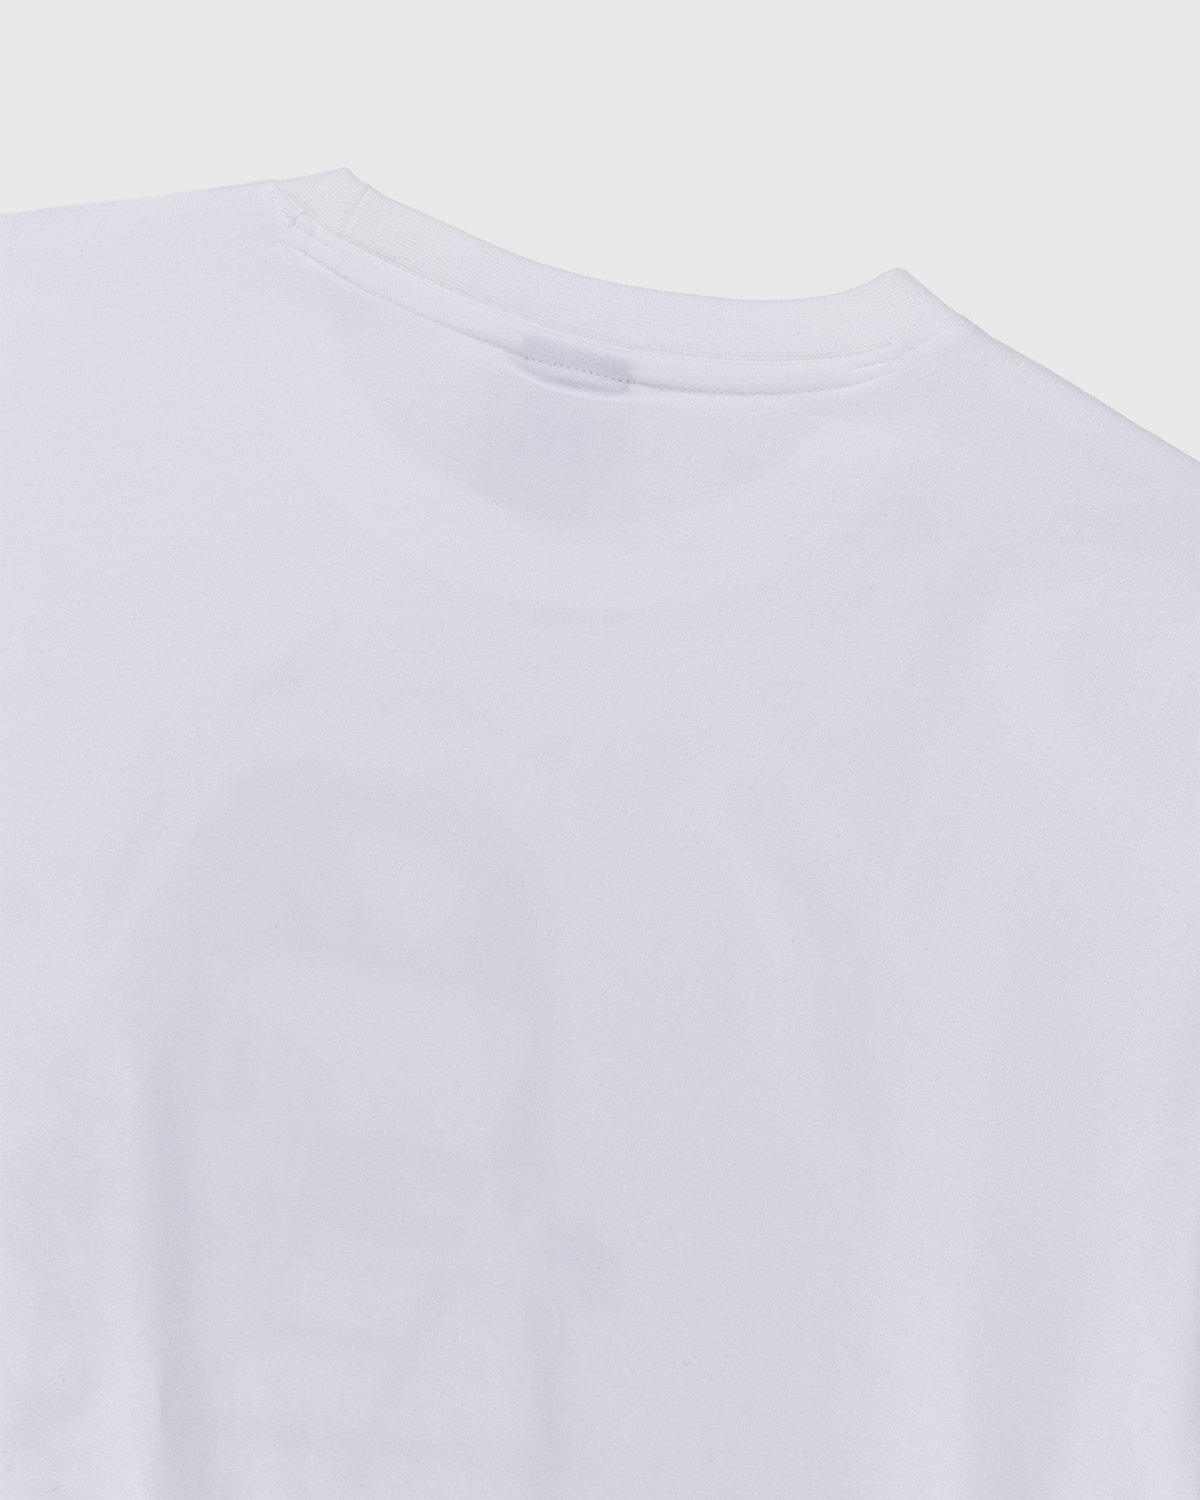 New Balance - Conversations Amongst Us Heavyweight T-Shirt White - Clothing - White - Image 3